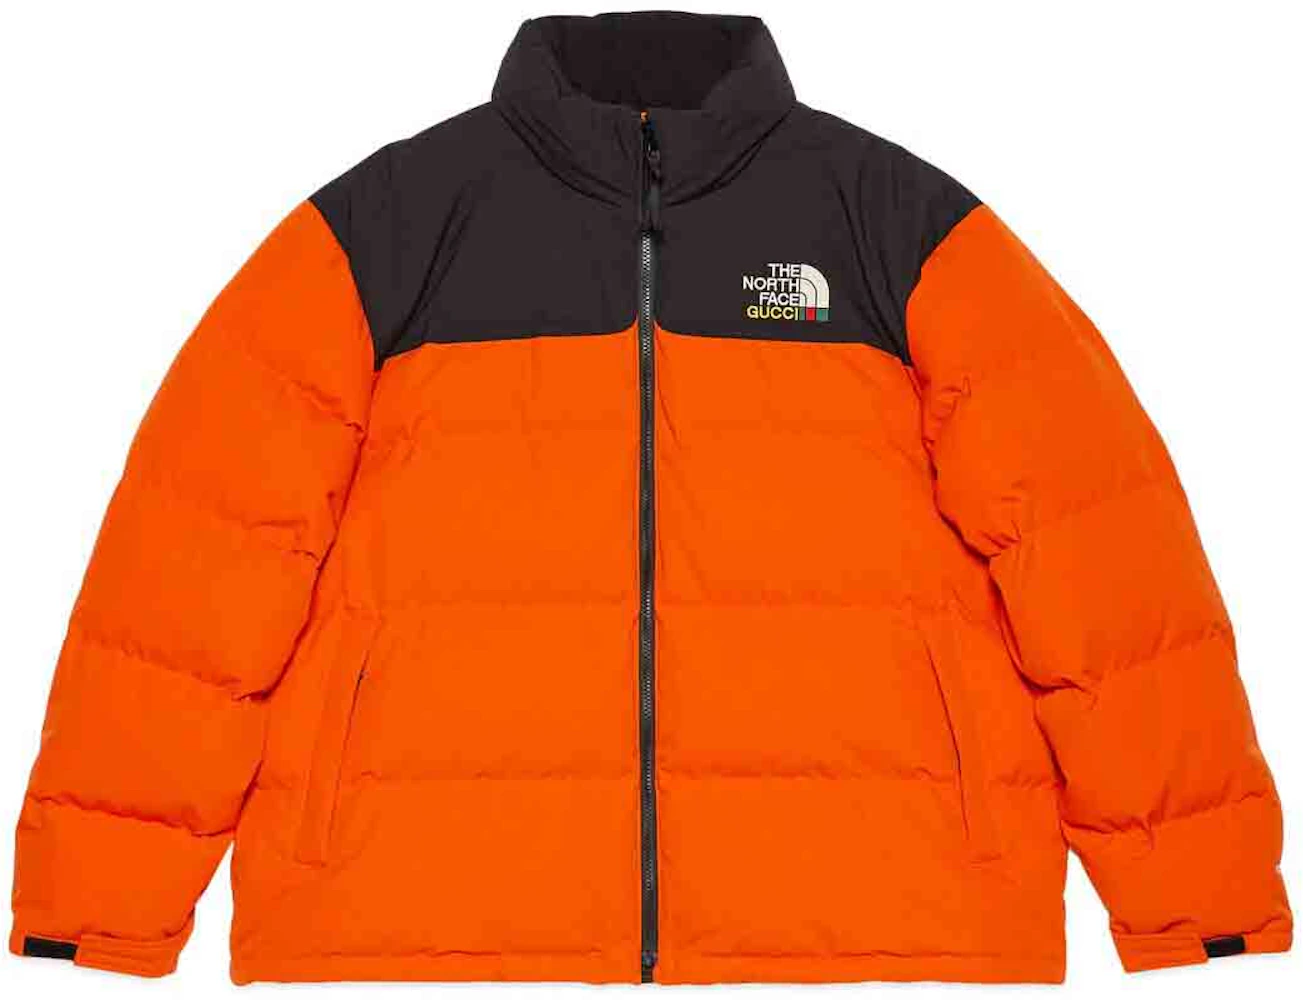 Gucci x The North Face Down Jacket Black/Orange